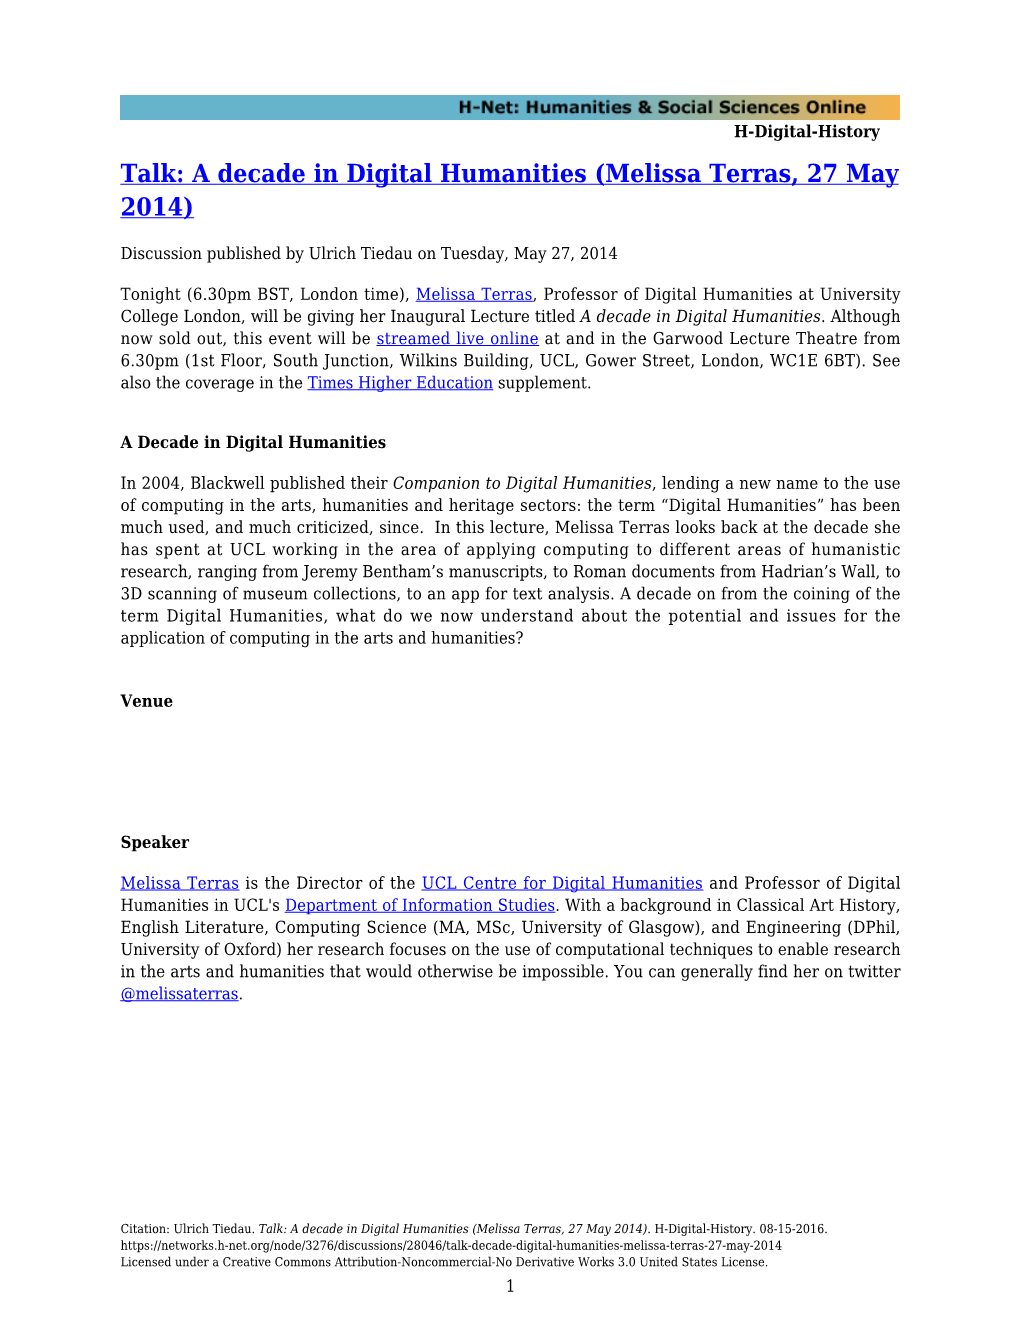 A Decade in Digital Humanities (Melissa Terras, 27 May 2014)